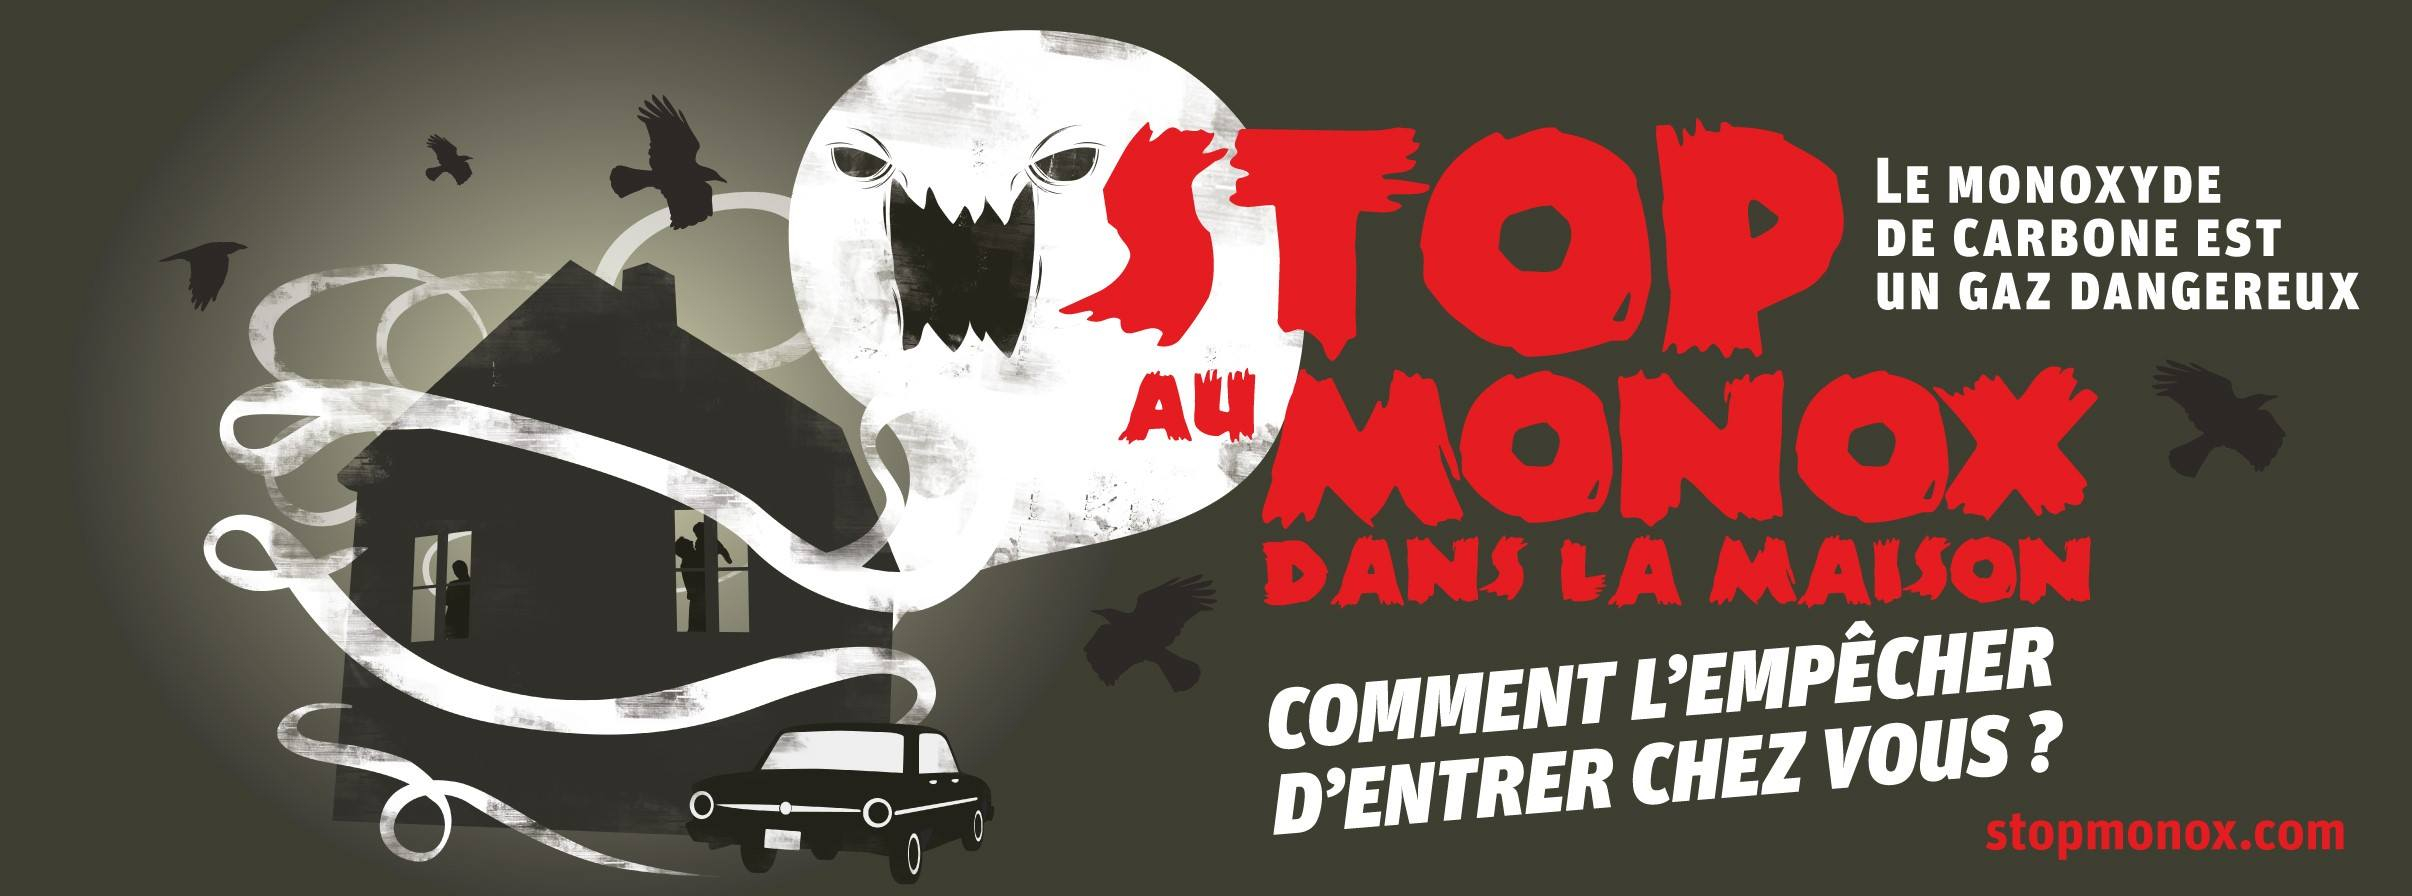 Bannière Monoxyde - StopMonox (jpg)